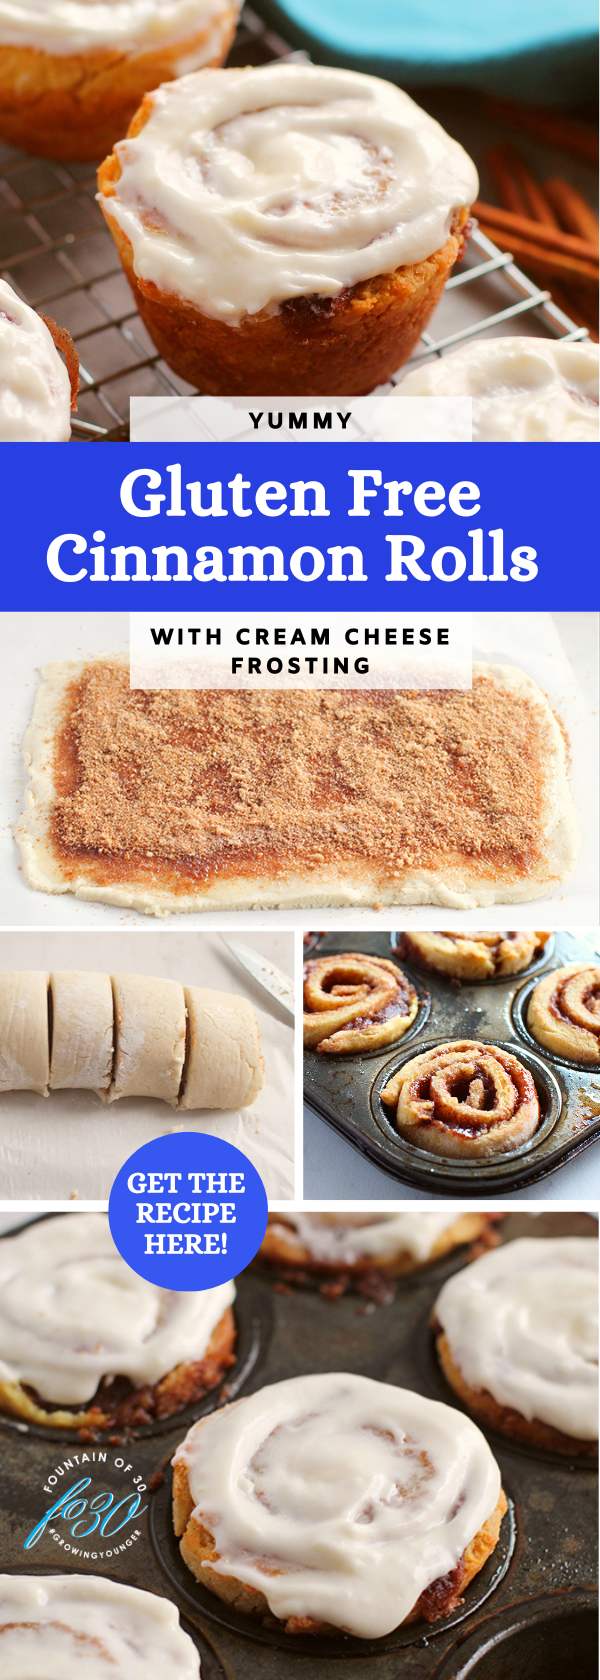 cinnamon rolls with cream cheese frosting gluten free recipe fountainof30